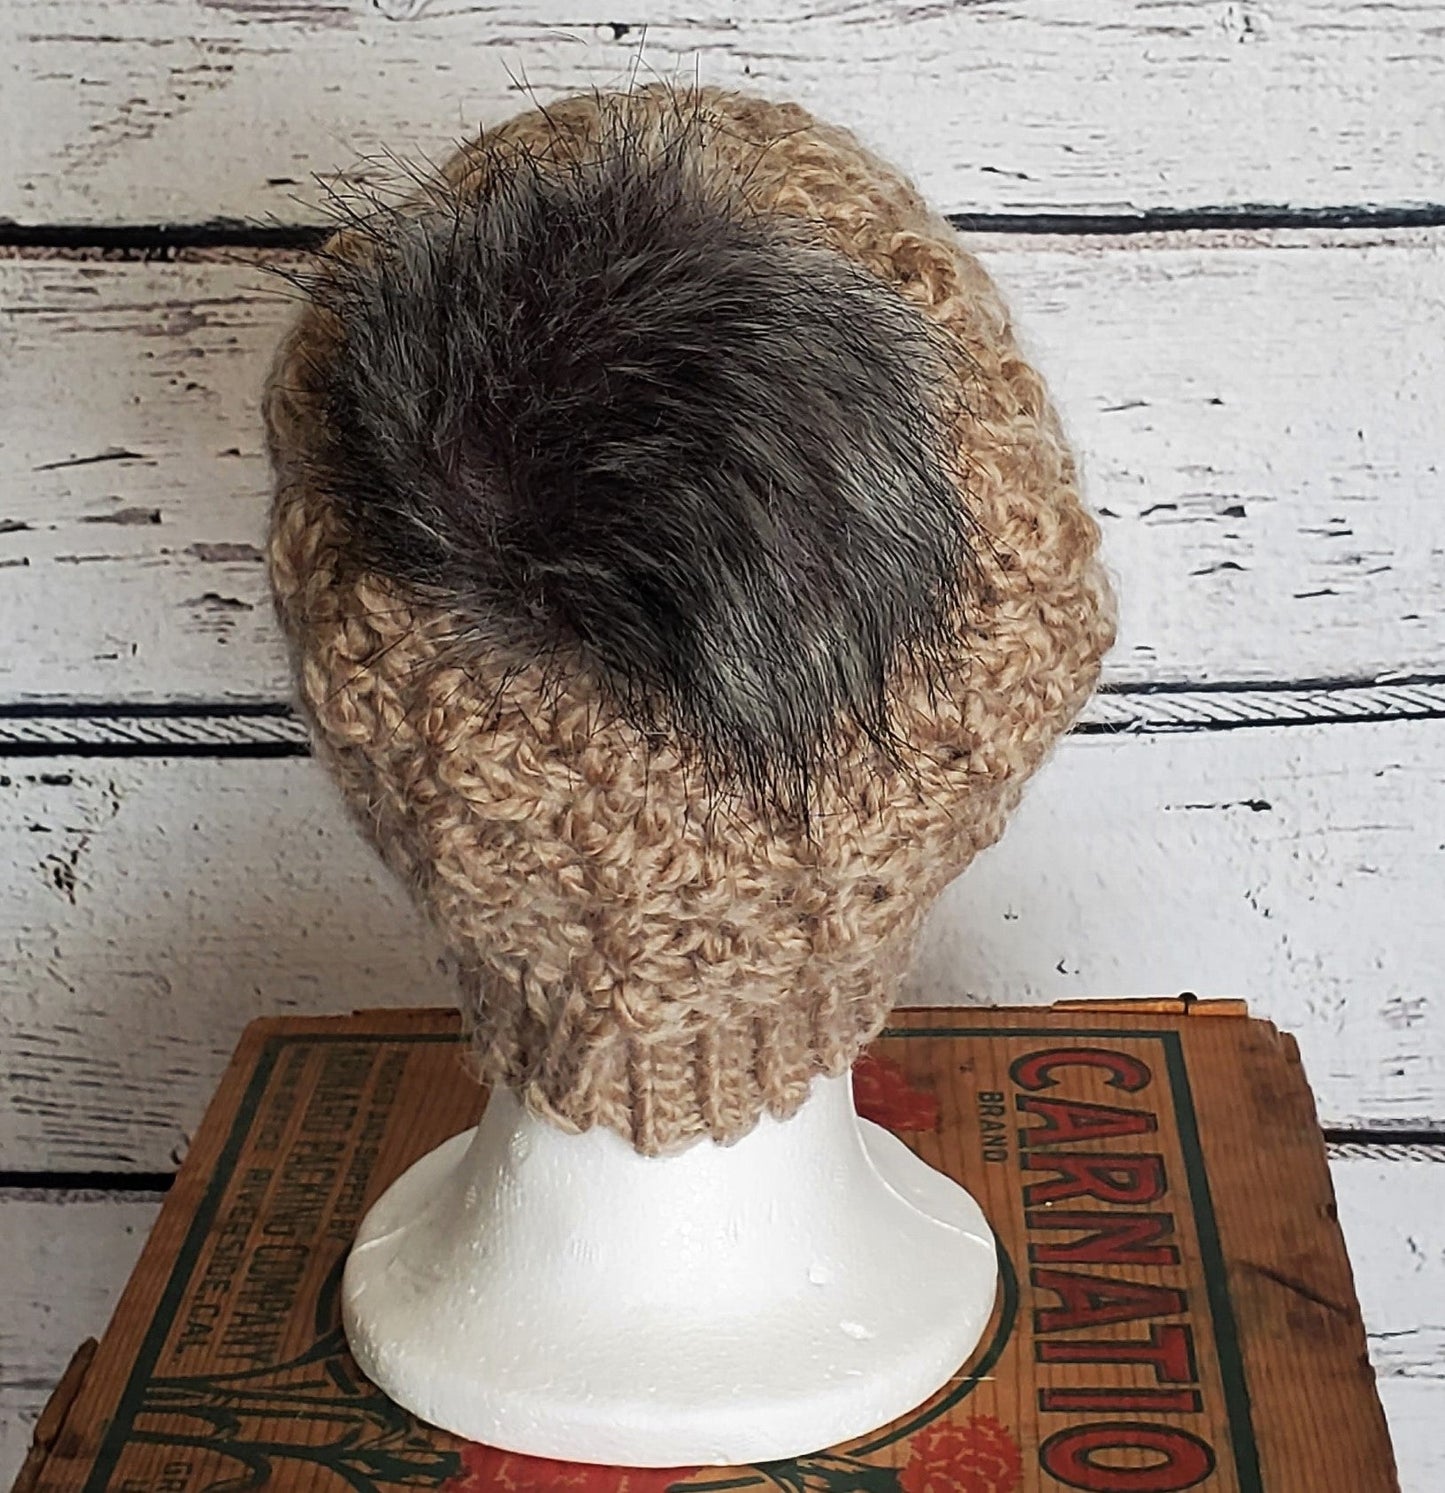 Taupe Alpaca Blend Wool Crochet Hat with Pom - a-Farm-girl-bytess | Handmade Alpaca Wool Winter Hats for Women